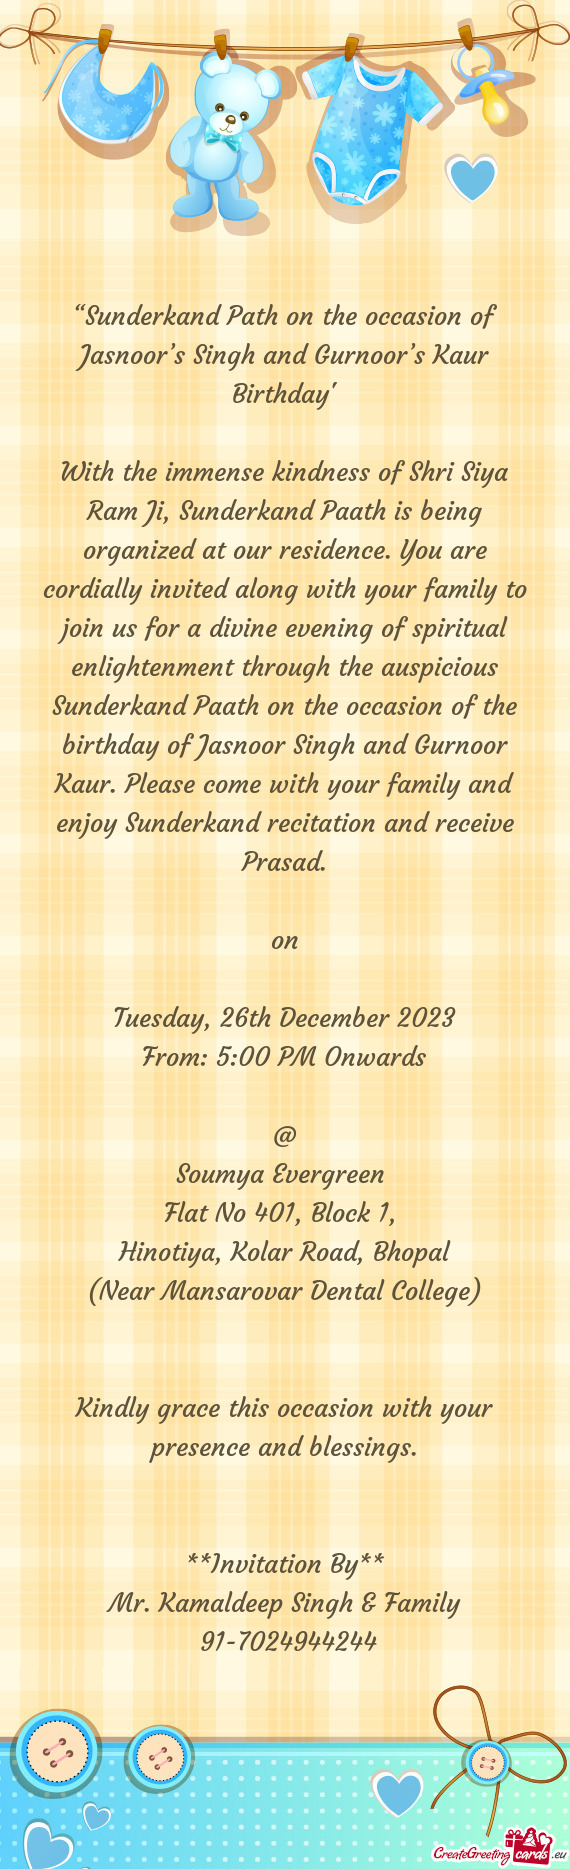 “Sunderkand Path on the occasion of Jasnoor’s Singh and Gurnoor’s Kaur Birthday”